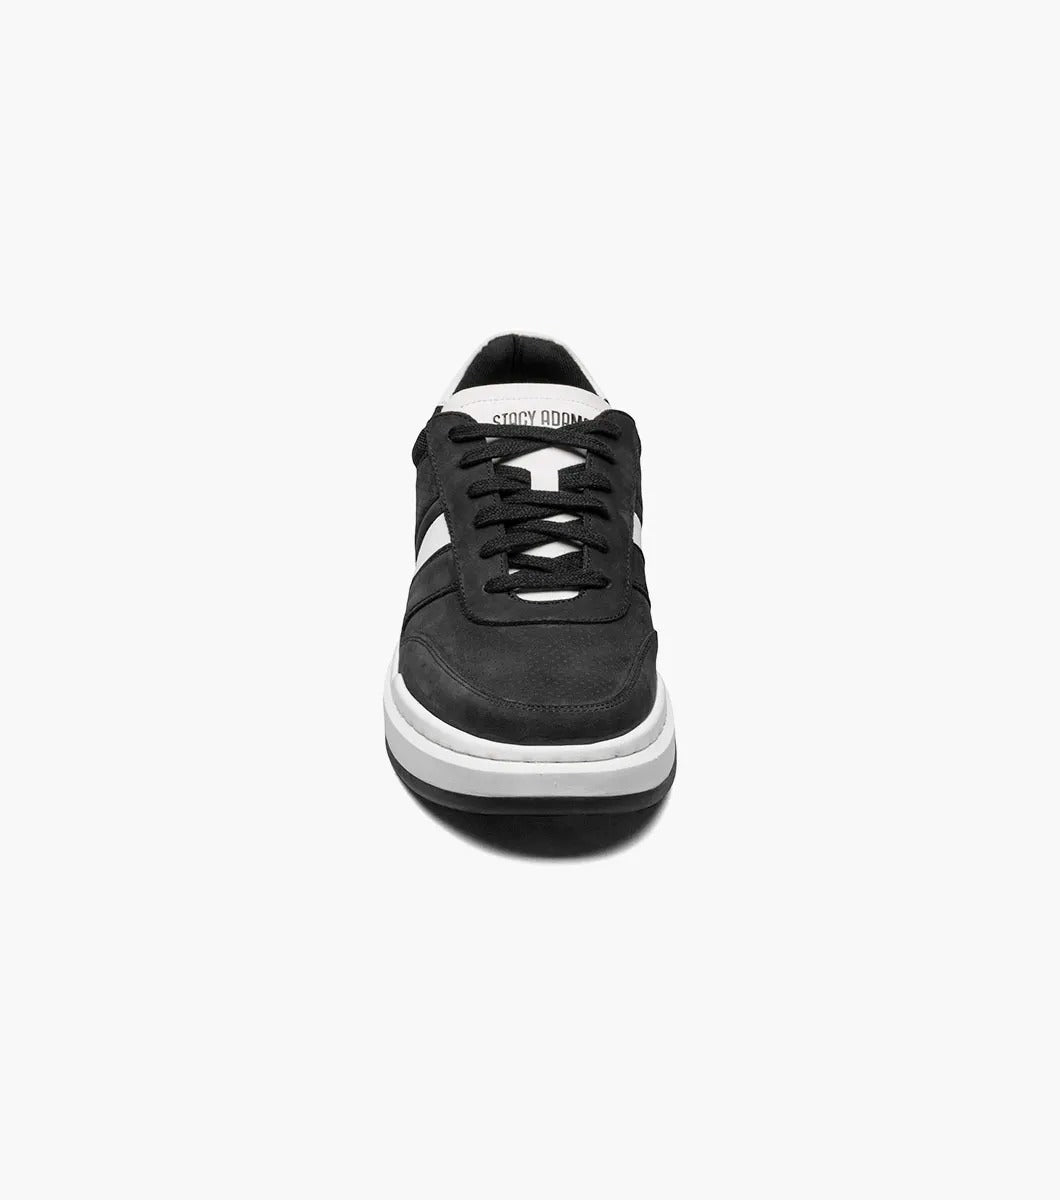 Stacy Adams - CURRIER Moc Toe Lace Up Sneaker - Black - 25515-001